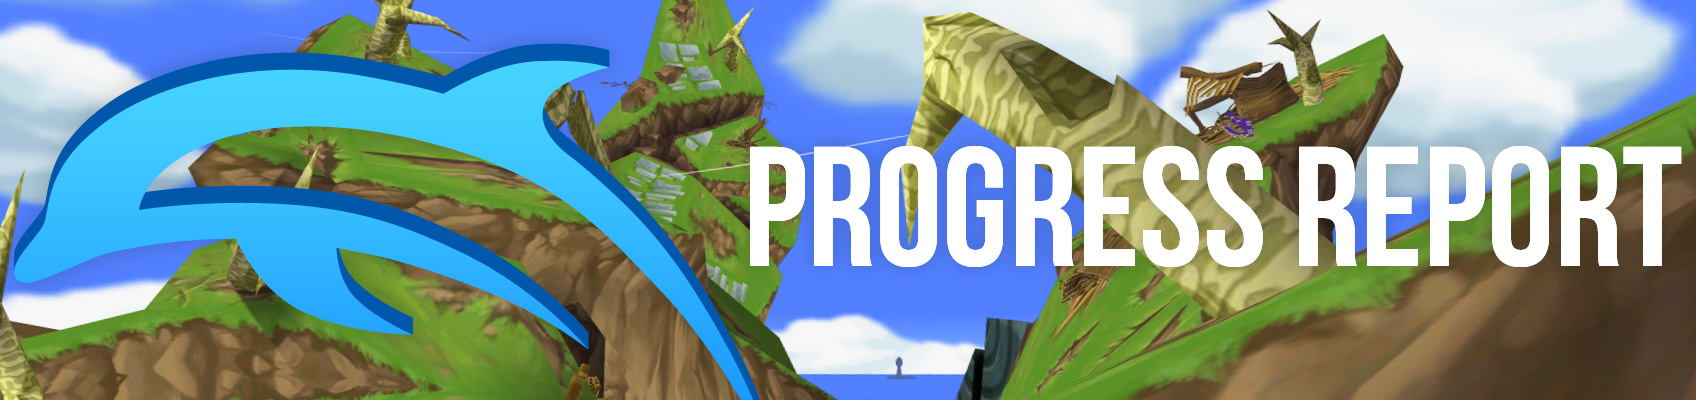 Progressreportheader-March2015.jpg